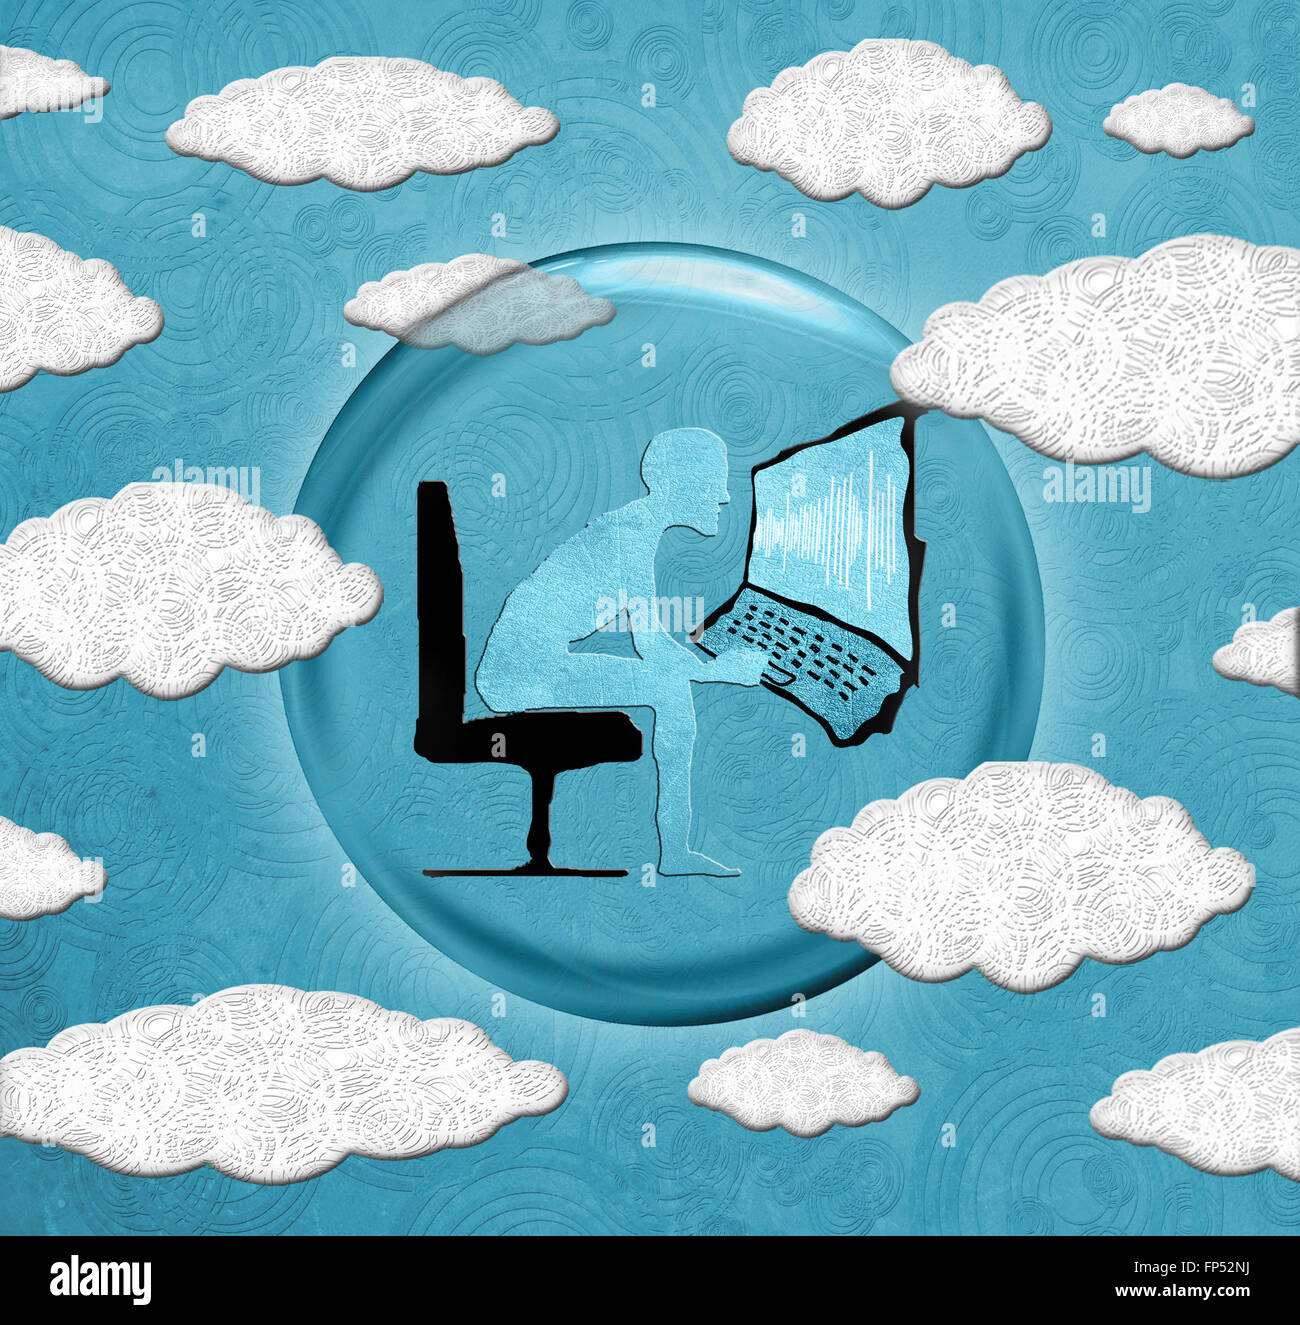 cloud computing concept digital illustration Stock Photo